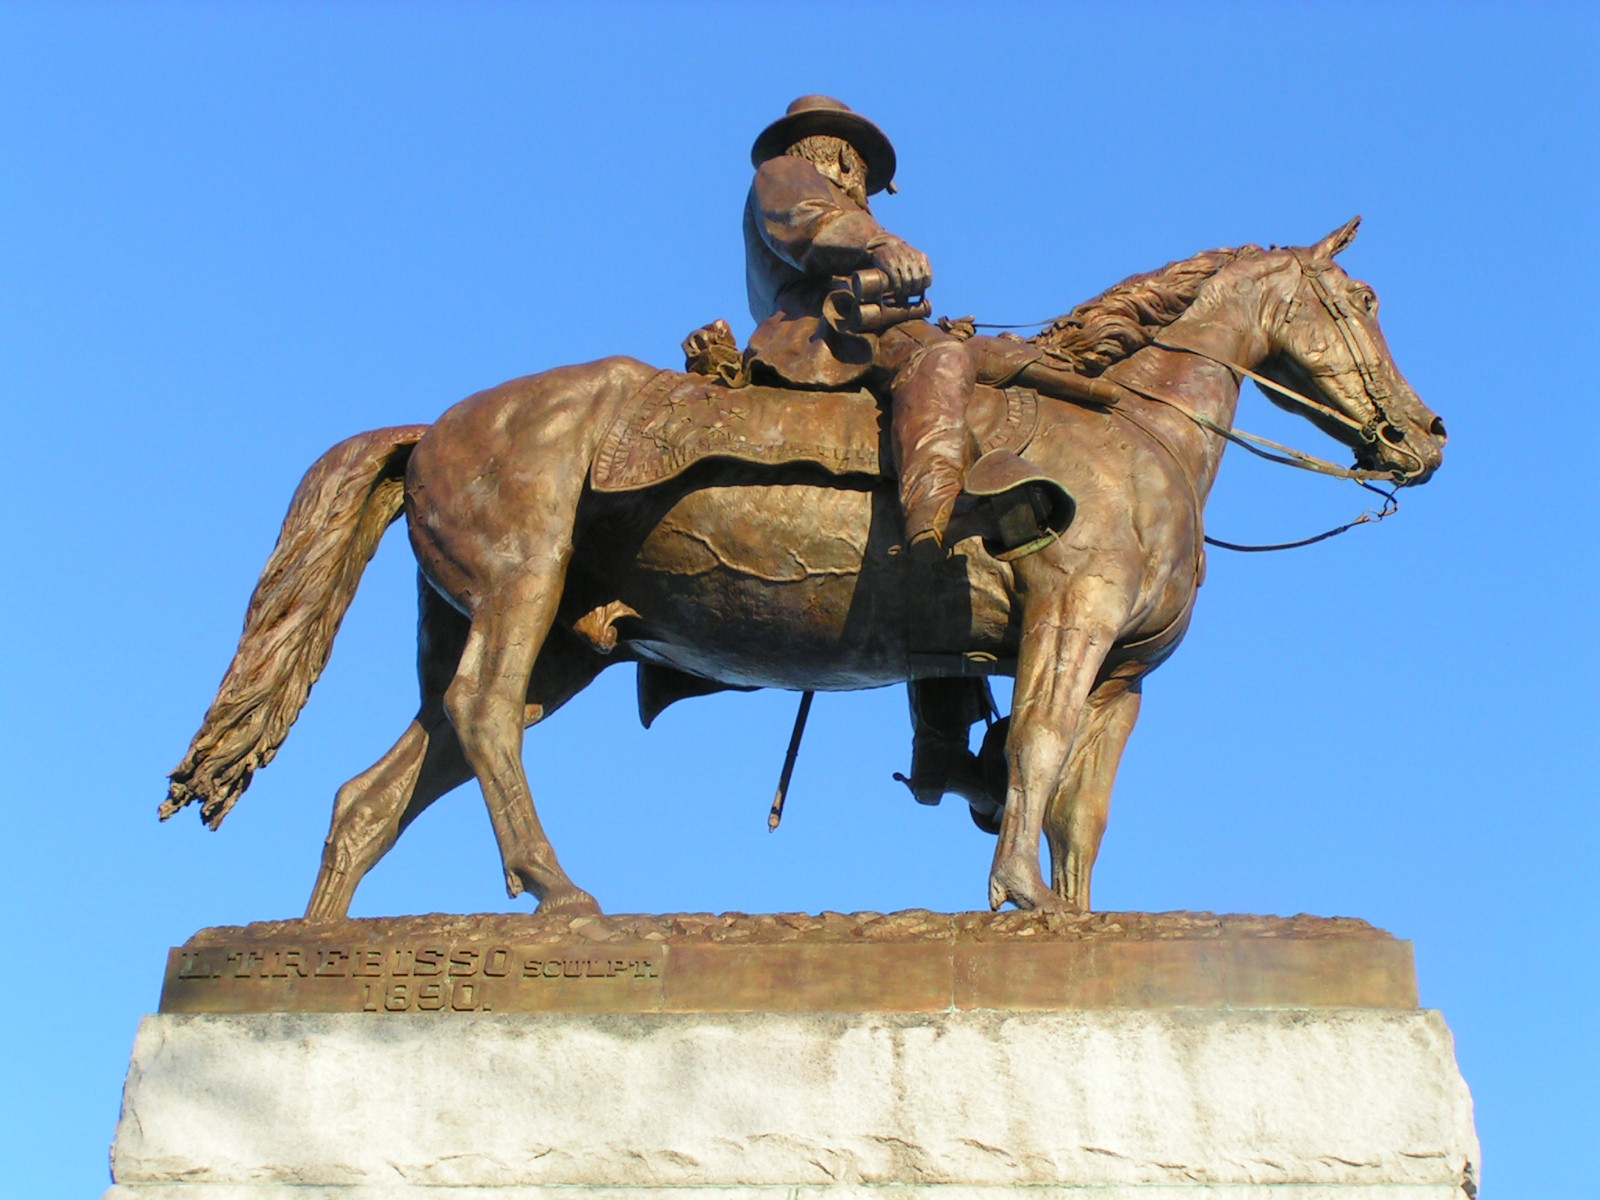 a man in western gear sitting on a horse statue